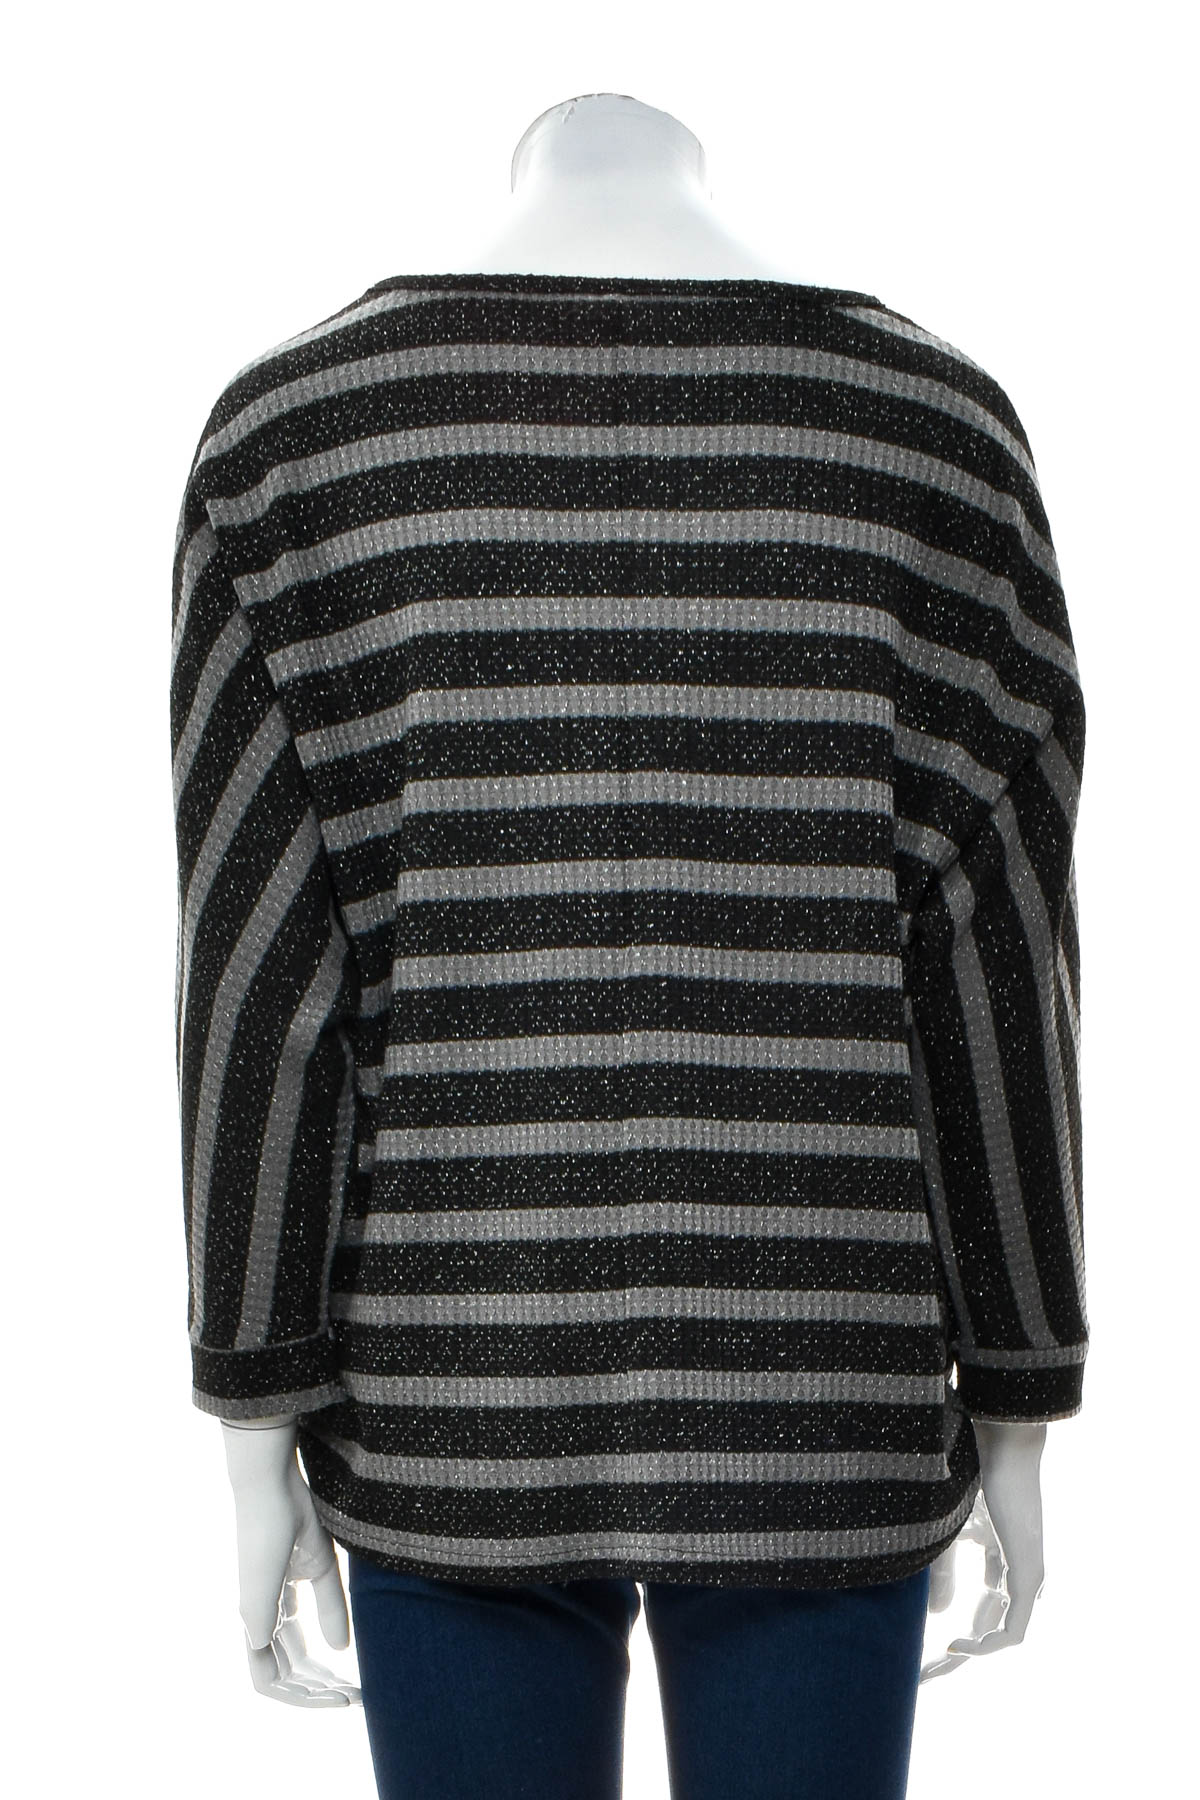 Women's sweater - Takko Fashion - 1